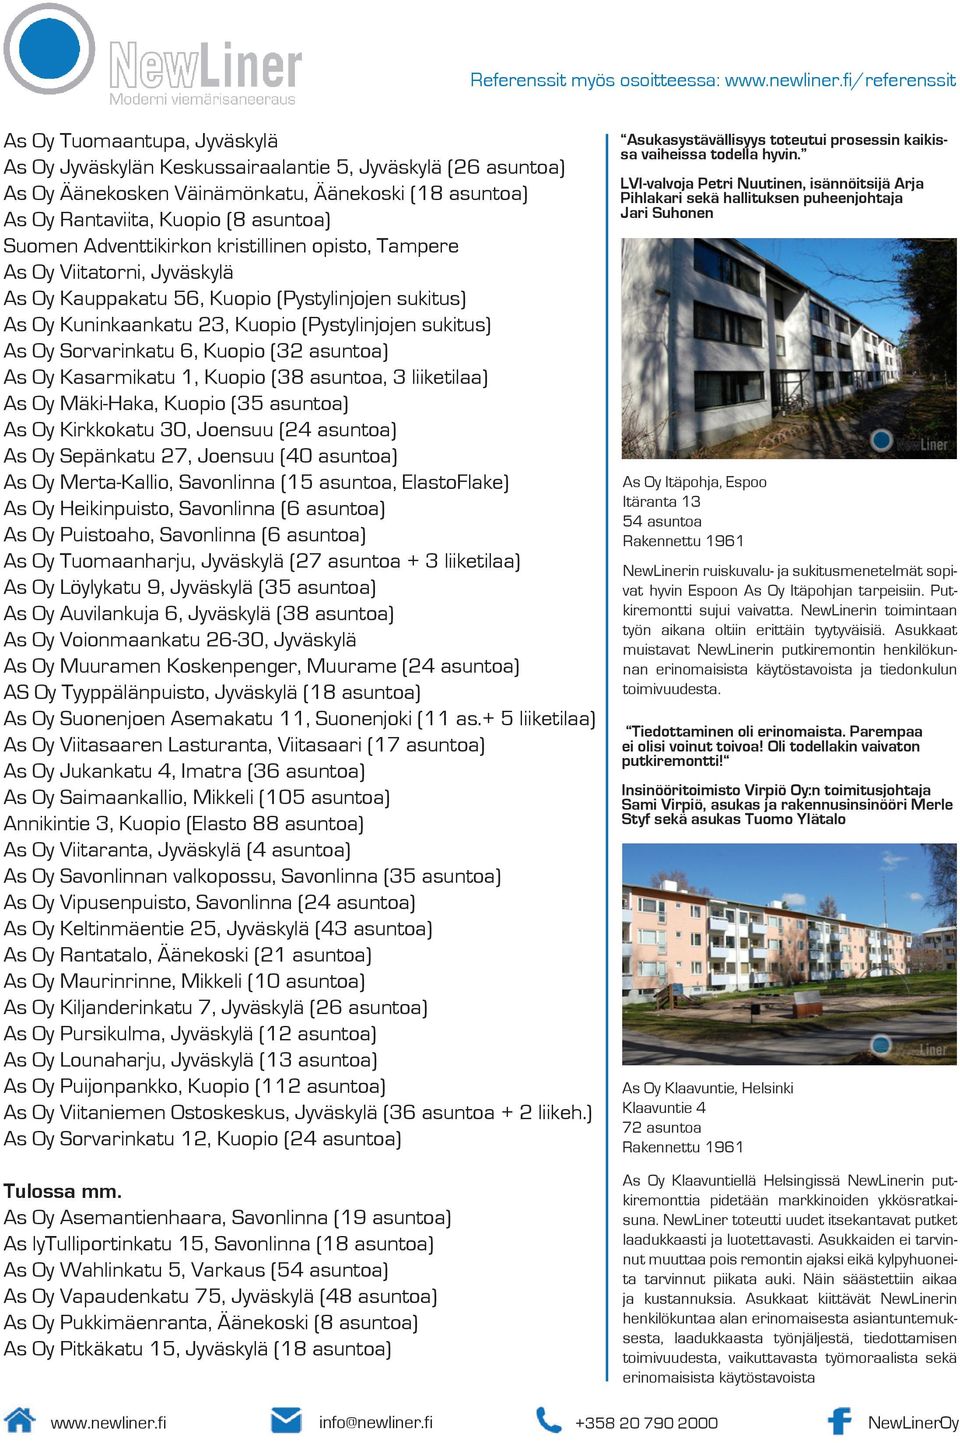 (Pystylinjojen sukitus) As Oy Sorvarinkatu 6, Kuopio (32 asuntoa) As Oy Kasarmikatu 1, Kuopio (38 asuntoa, 3 liiketilaa) As Oy Mäki-Haka, Kuopio (35 asuntoa) As Oy Kirkkokatu 30, Joensuu (24 asuntoa)